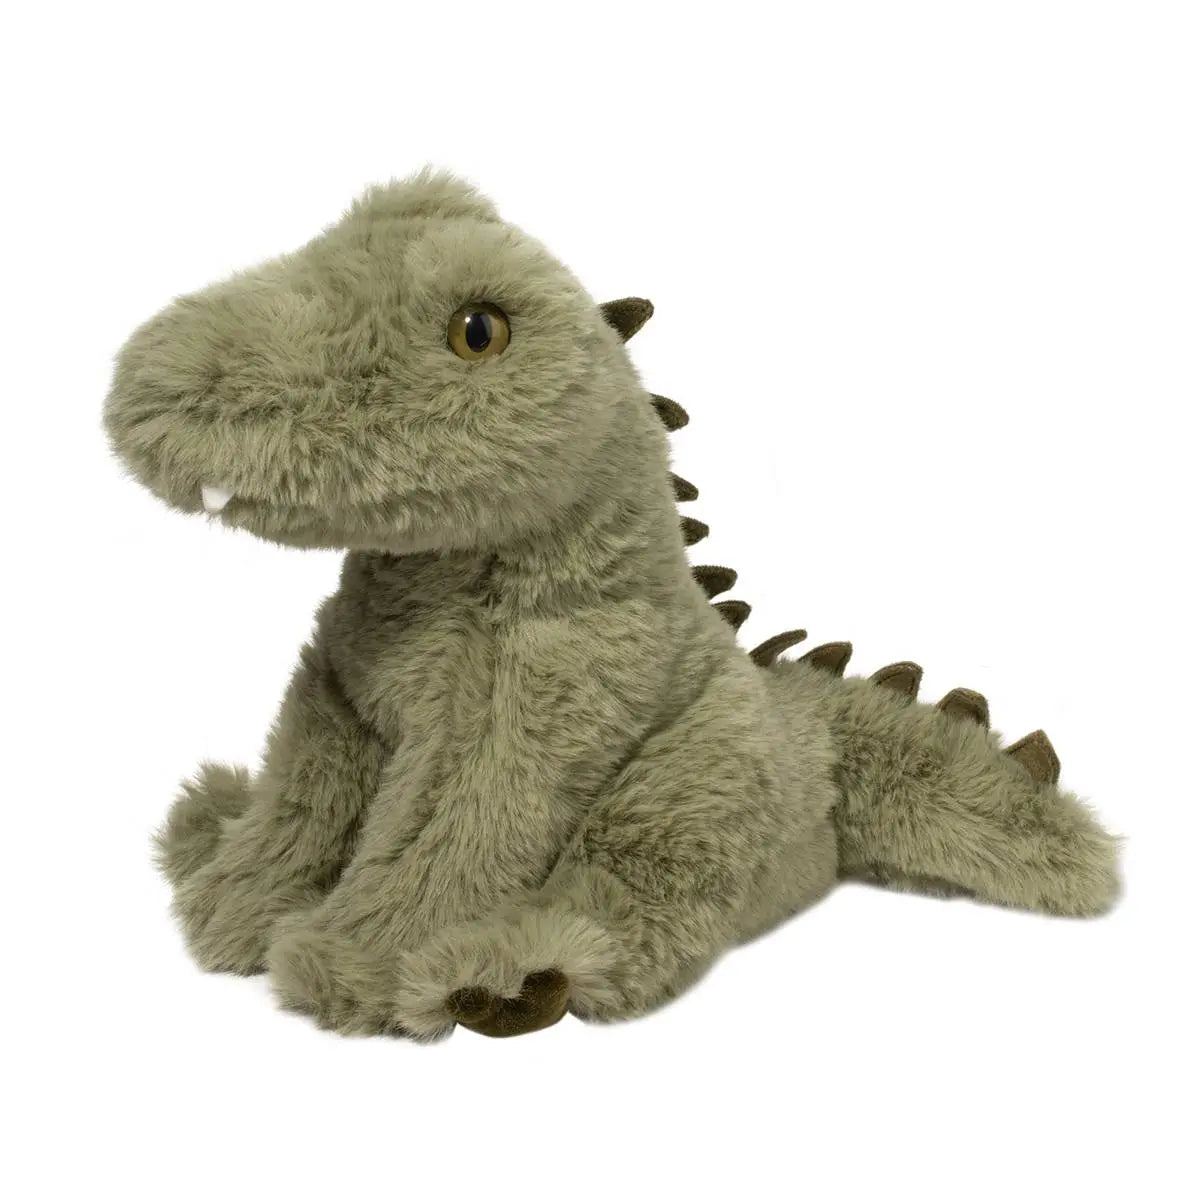 Stuffed Animal - Rex Alligator Mini Soft